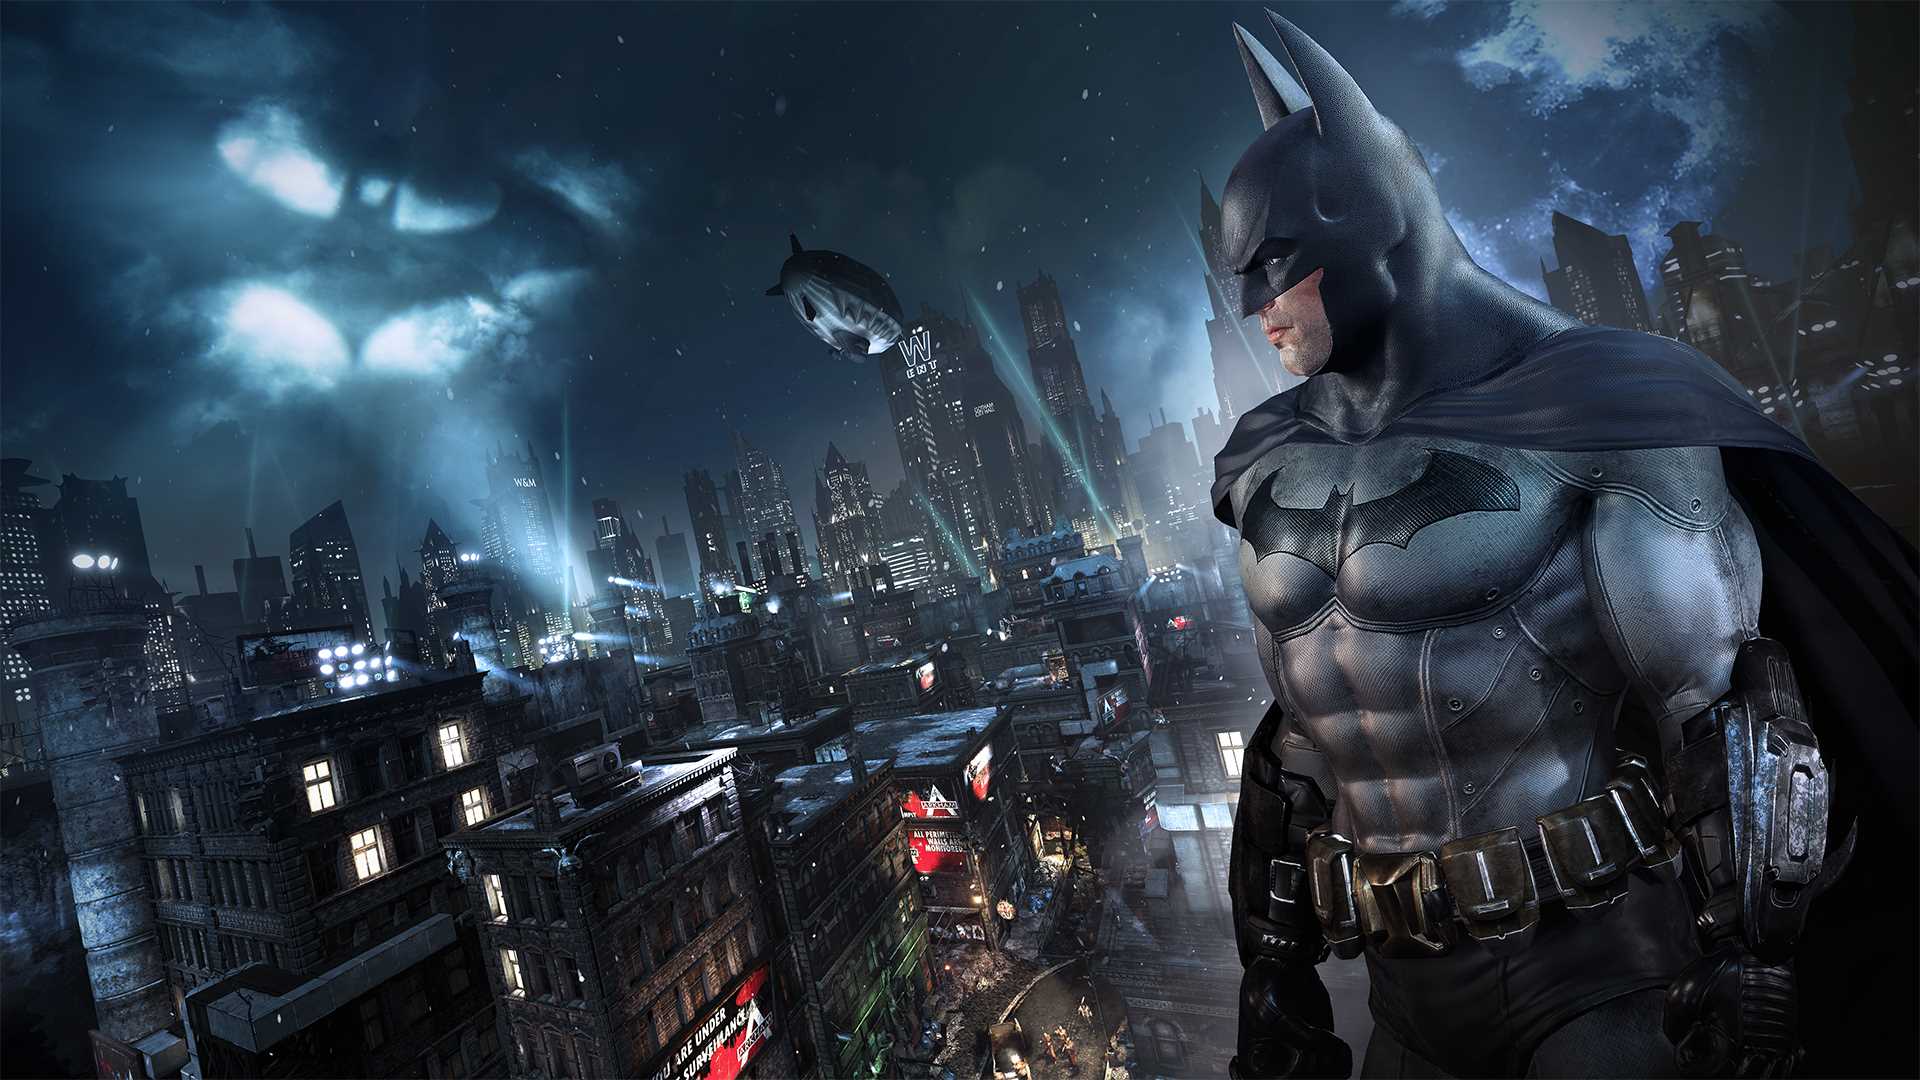 Batman Arkham City interview: superhero development, PC